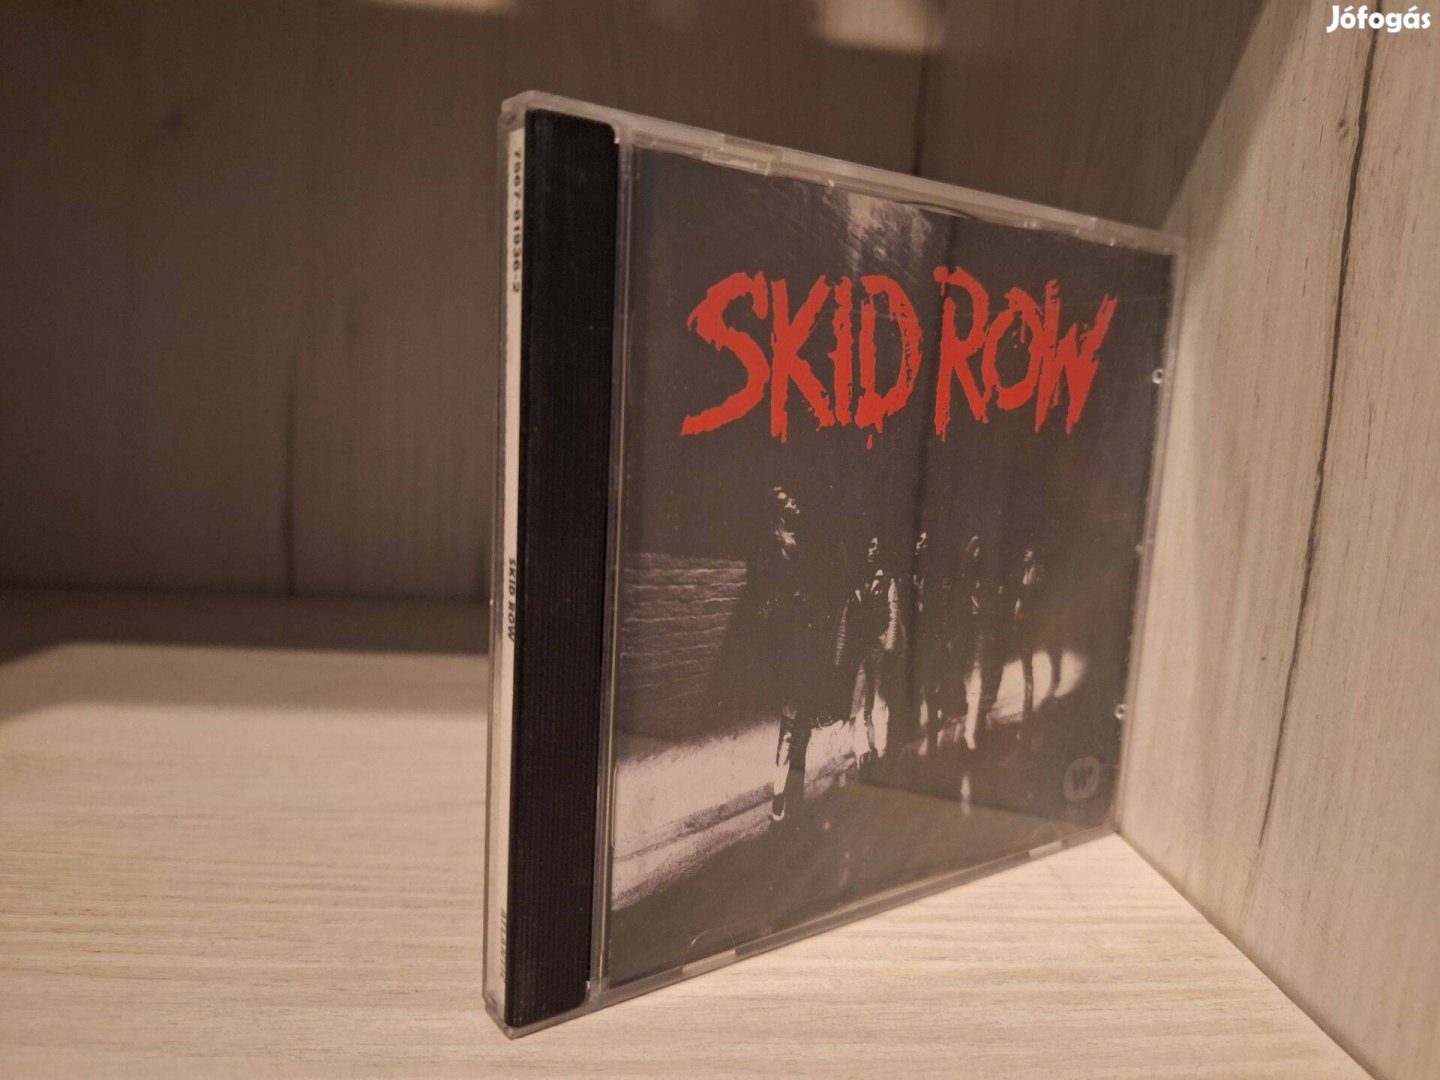 Skid Row - Skid Row CD